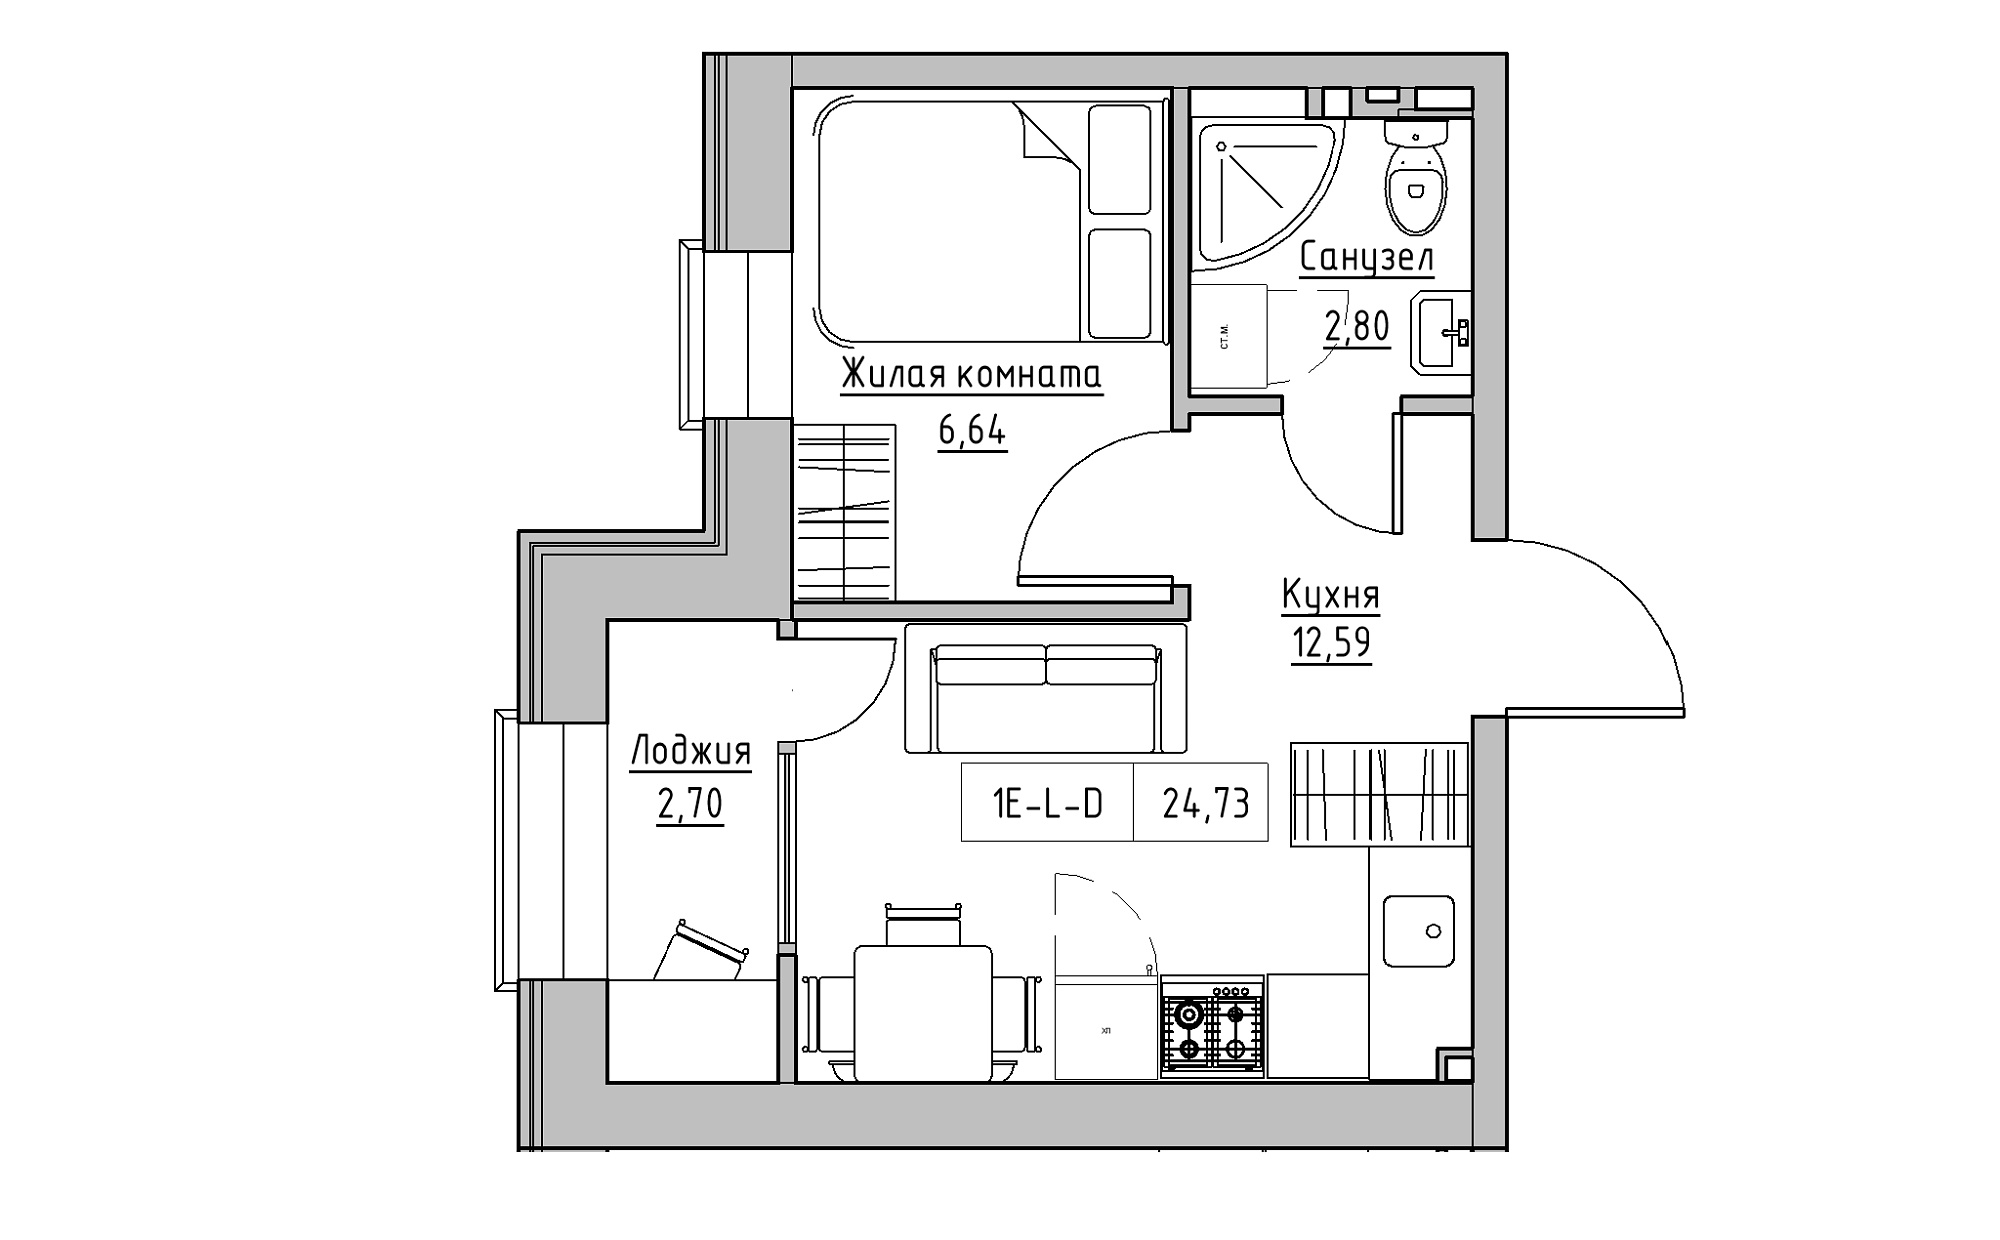 Planning 1-rm flats area 24.73m2, KS-022-05/0016.